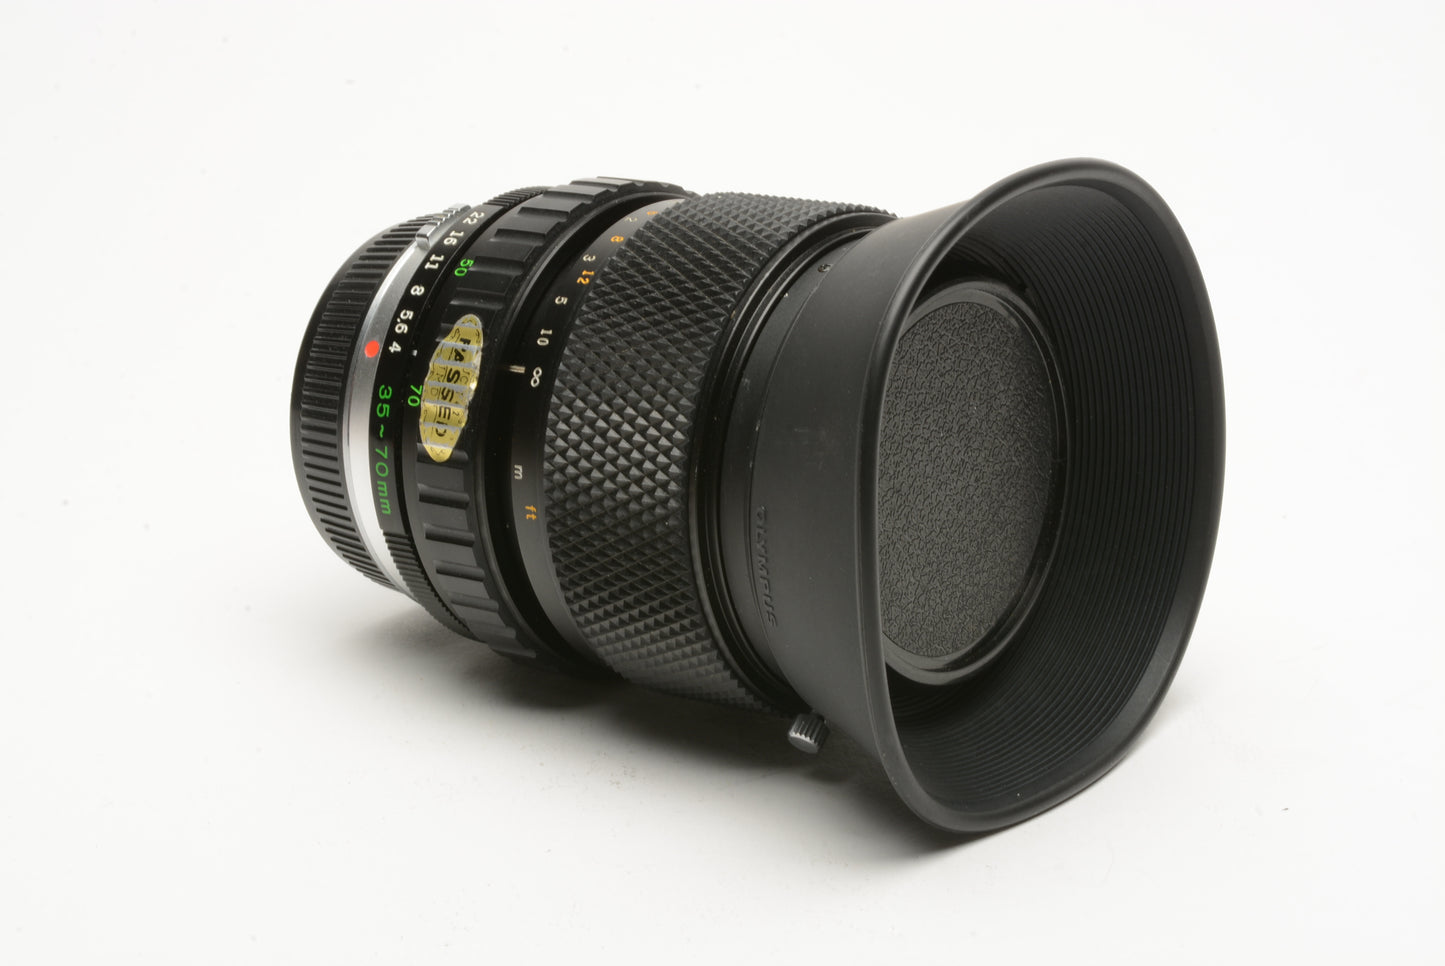 Olympus OM-System 35-70mm f4 zoom lens, hood, caps, UV